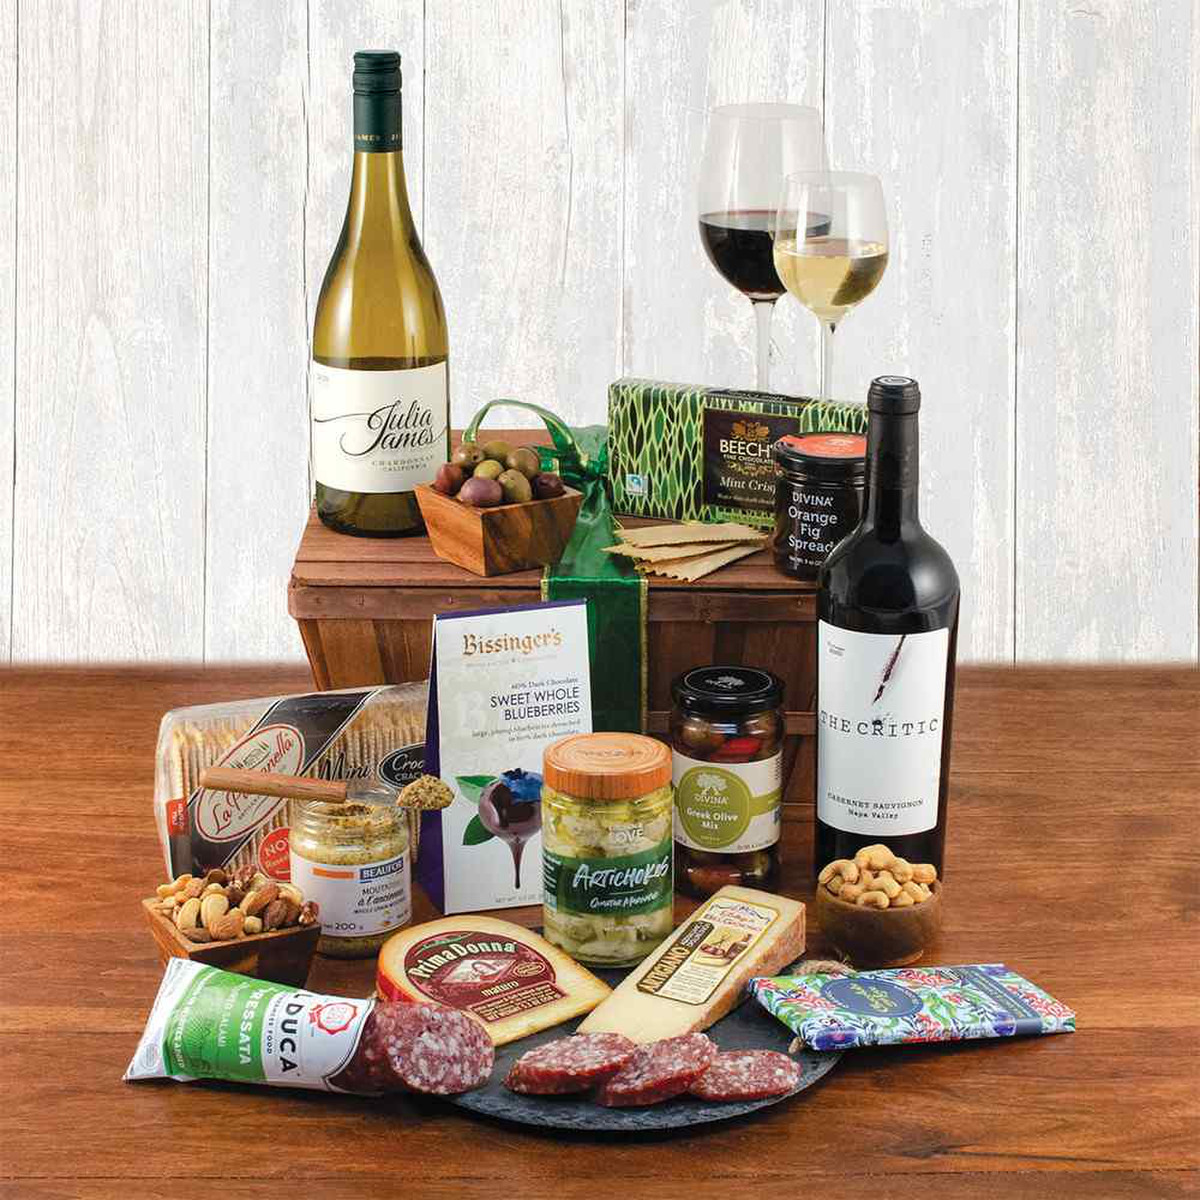 prodimages/The Critic Napa Cabernet and Julia James Chardonnay Wine and Artisanal Food Gift Basket